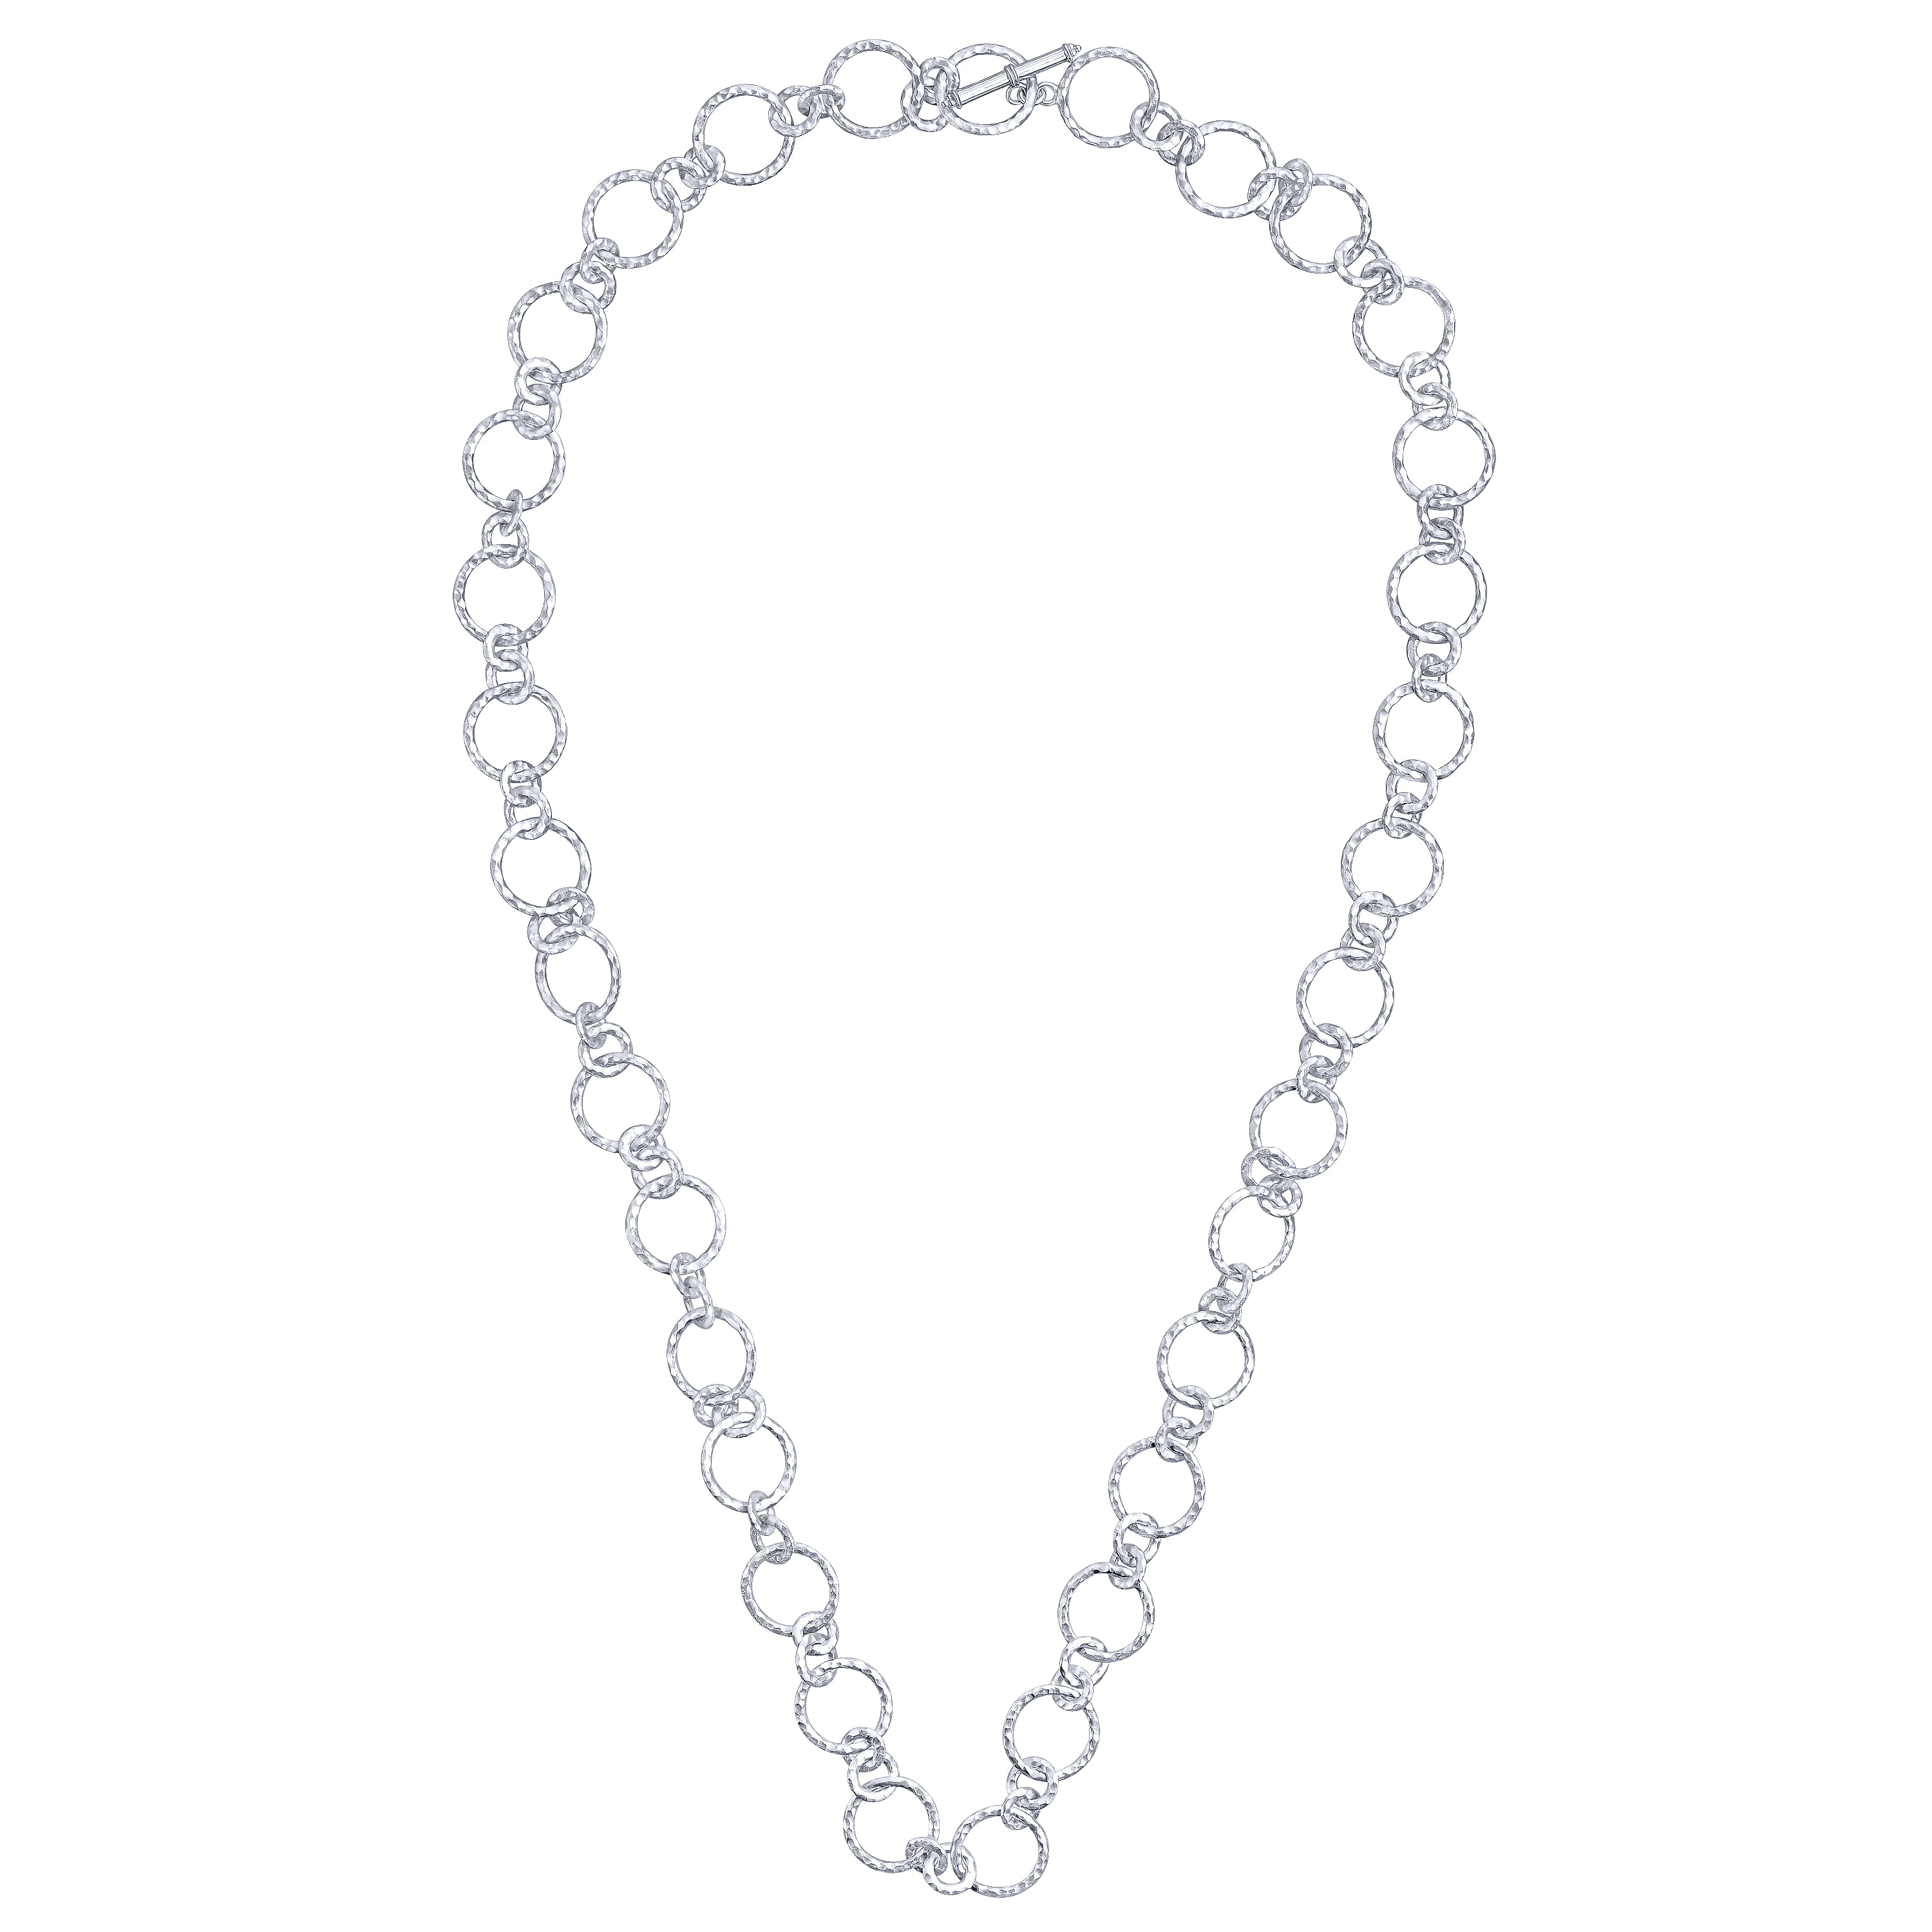 25 inch Silver Fashion Necklace